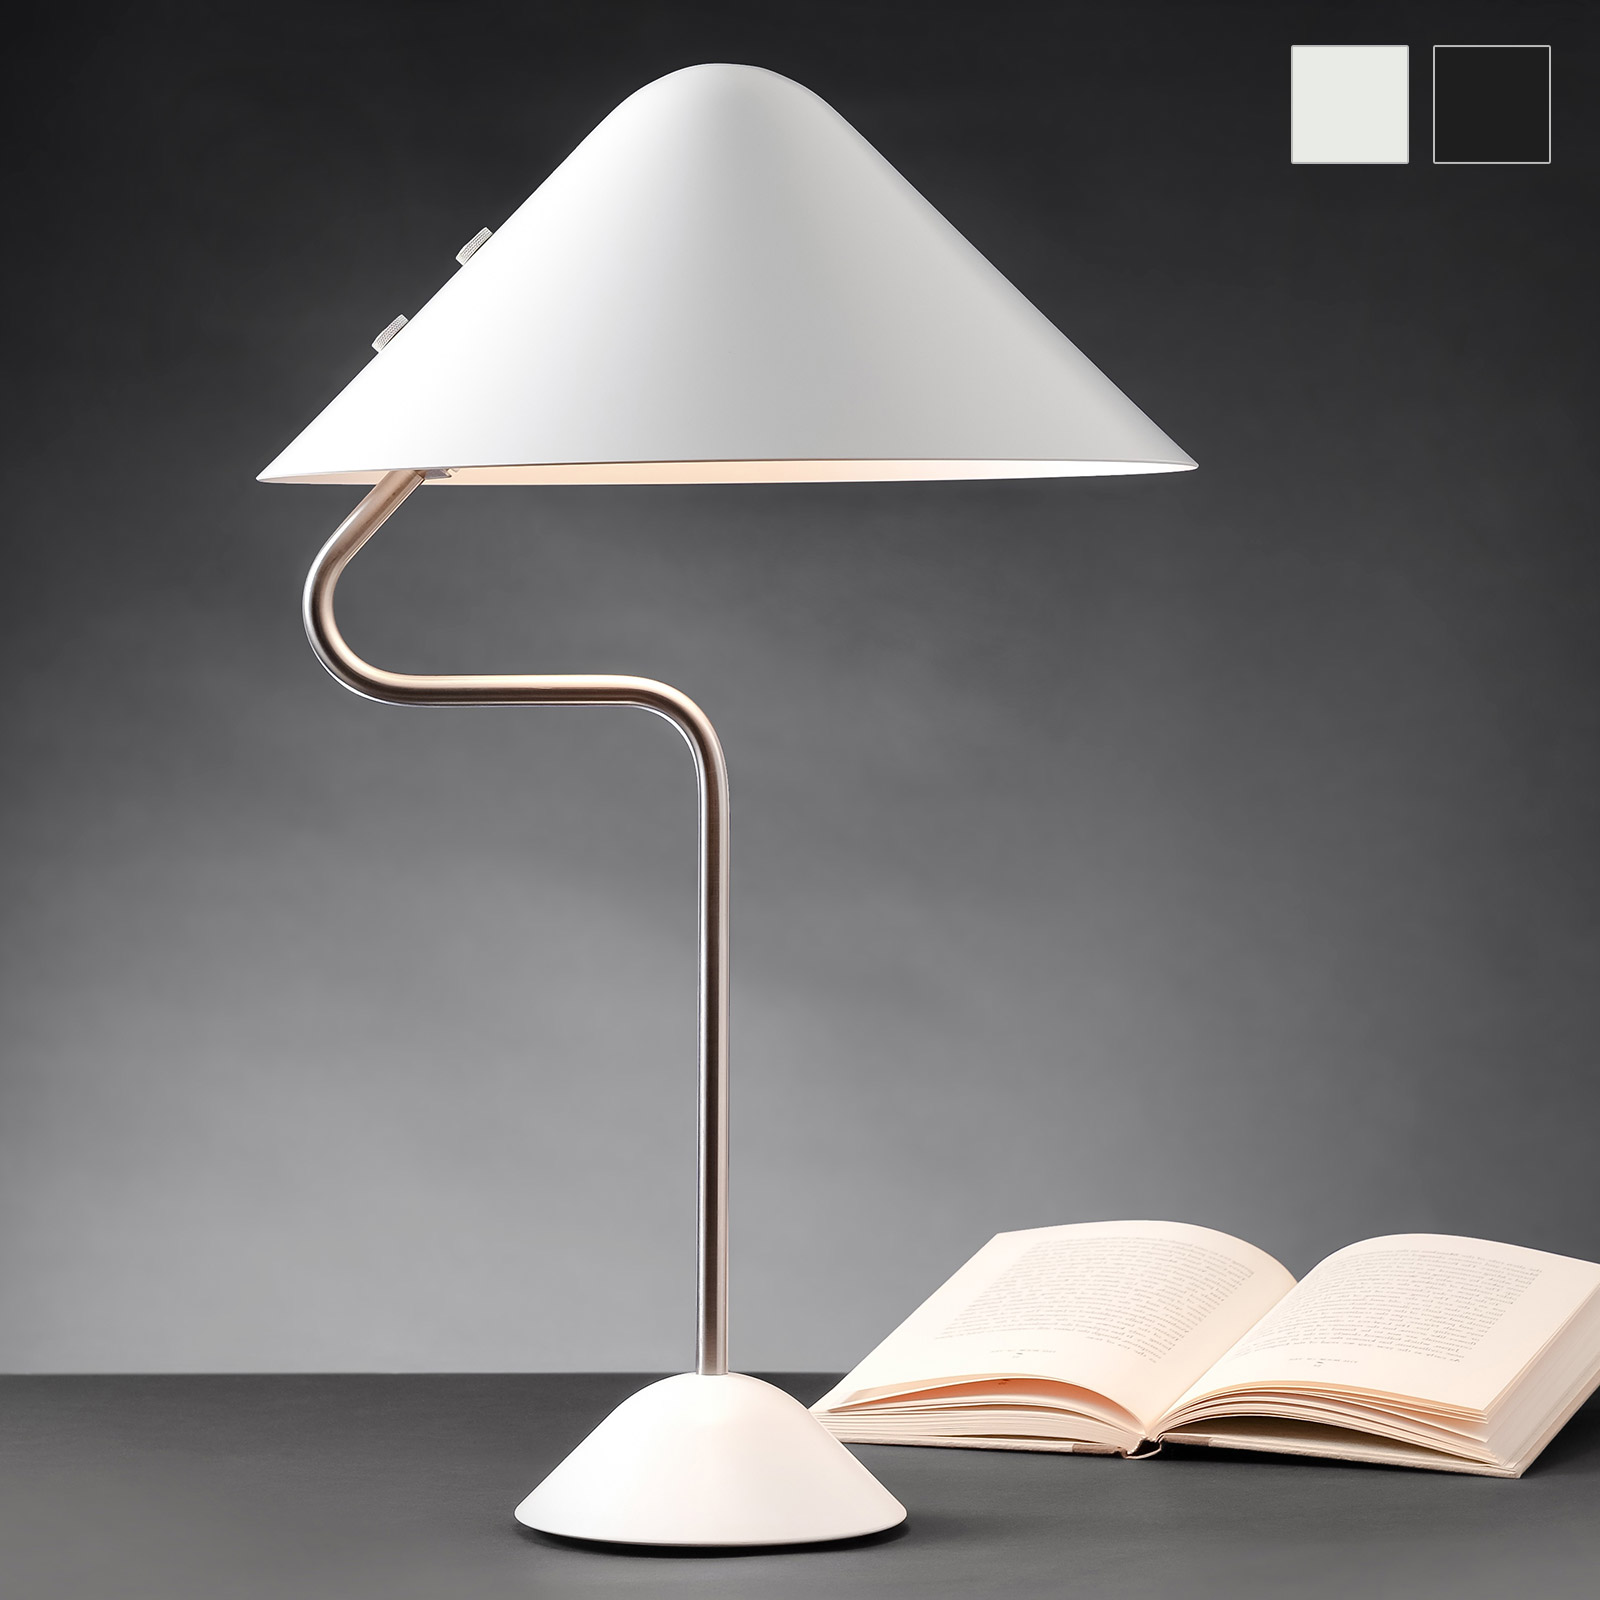 Designer Table Lamp Vip Scandivavian, Table Lamp Design Classic